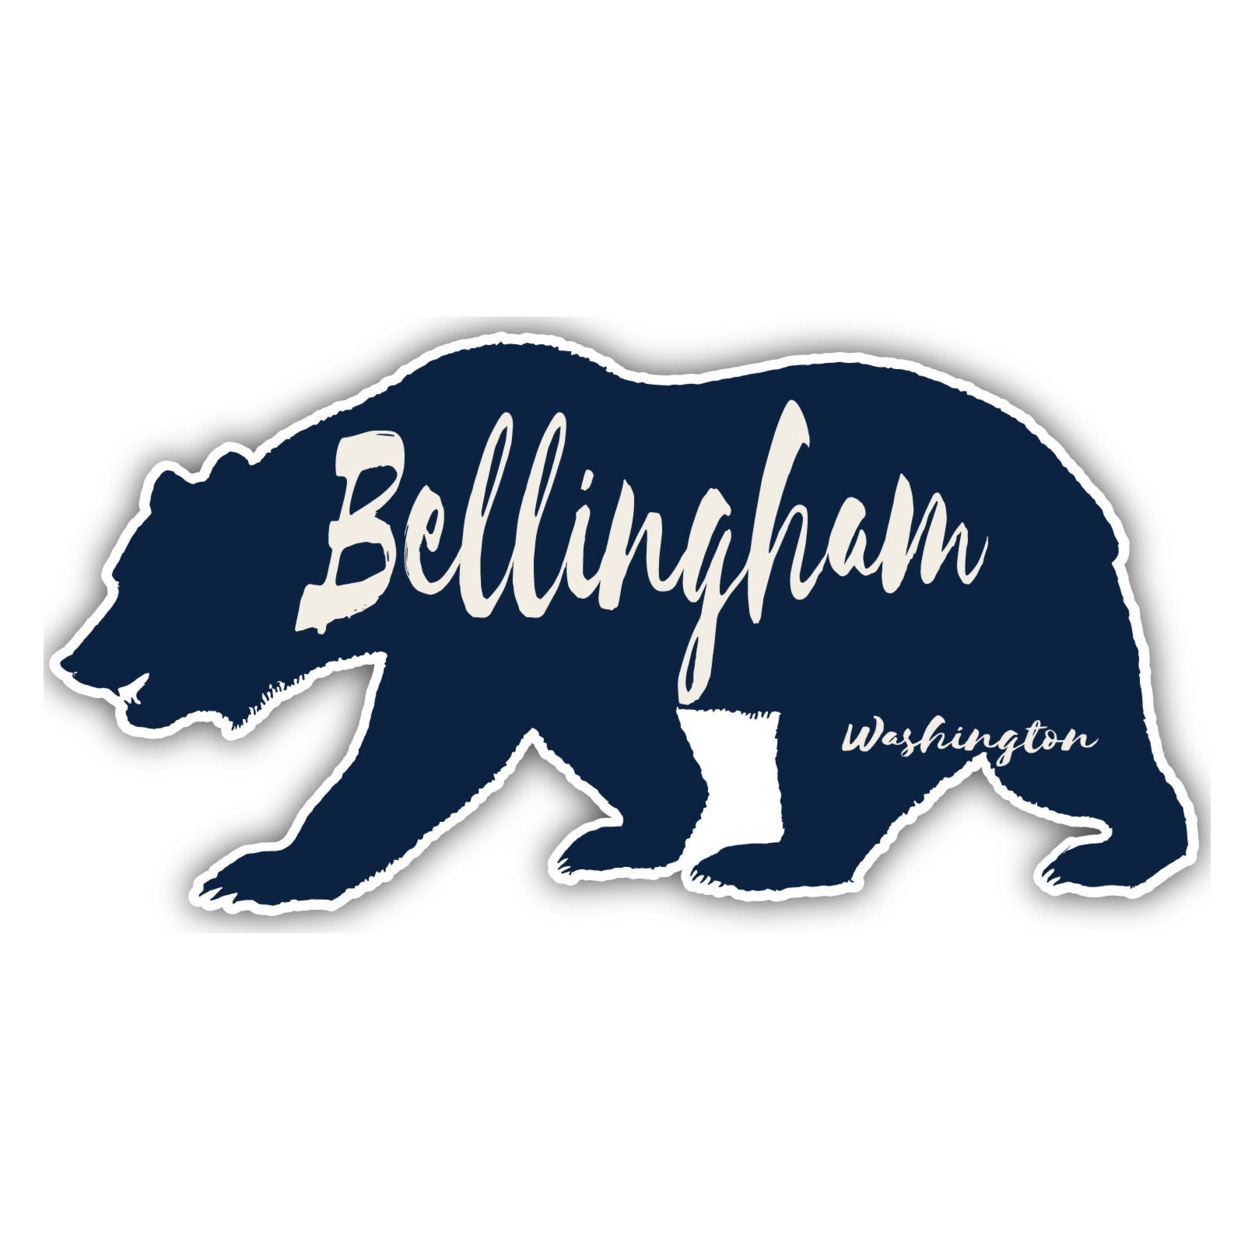 Bellingham Washington Souvenir Decorative Stickers (Choose Theme And Size) - Single Unit, 8-Inch, Bear